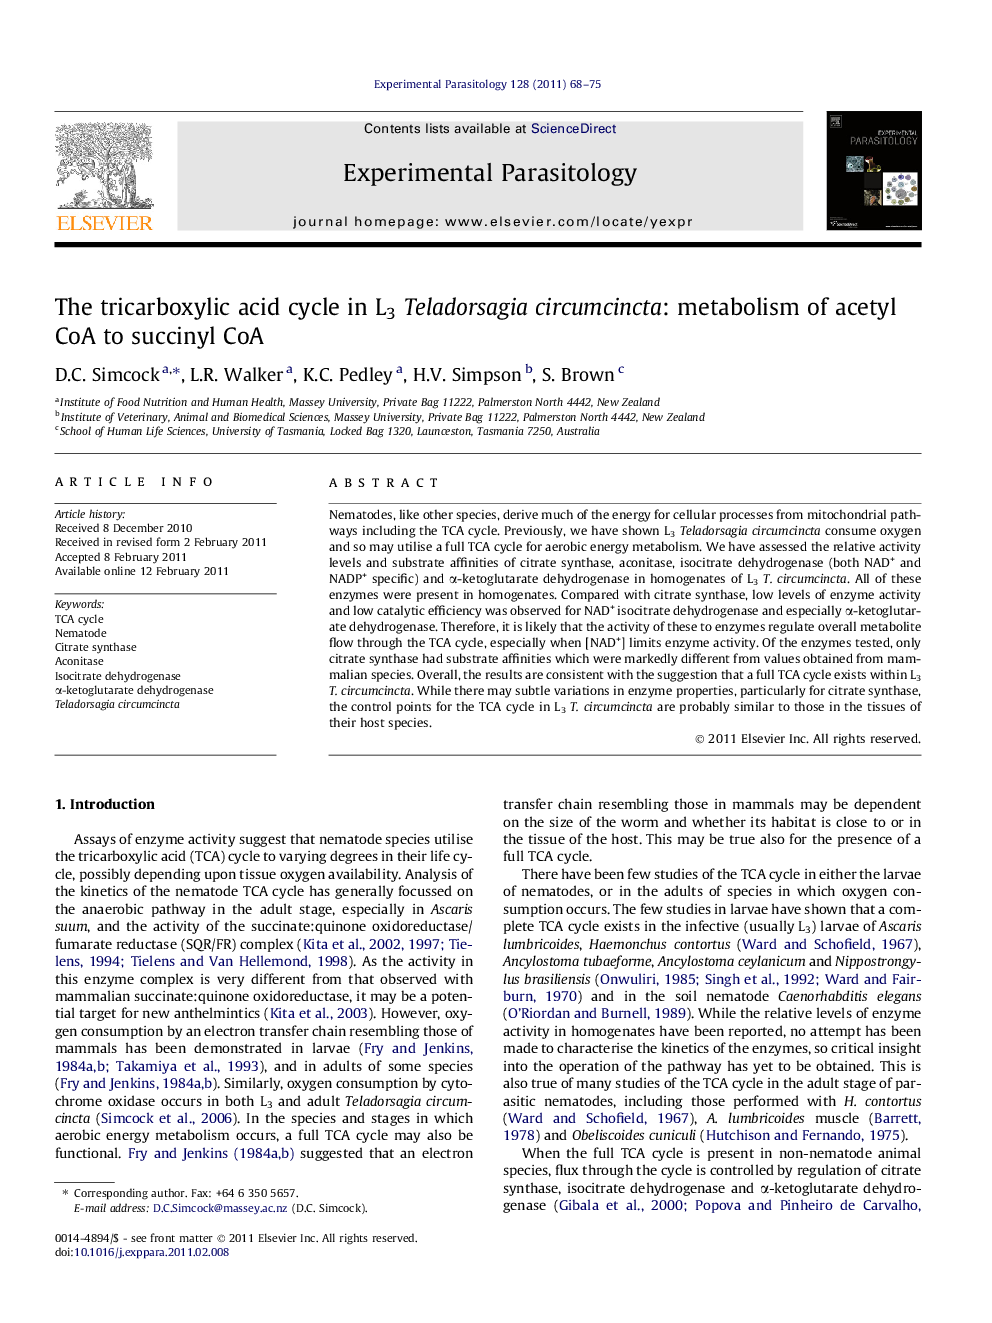 The tricarboxylic acid cycle in L3Teladorsagia circumcincta: metabolism of acetyl CoA to succinyl CoA